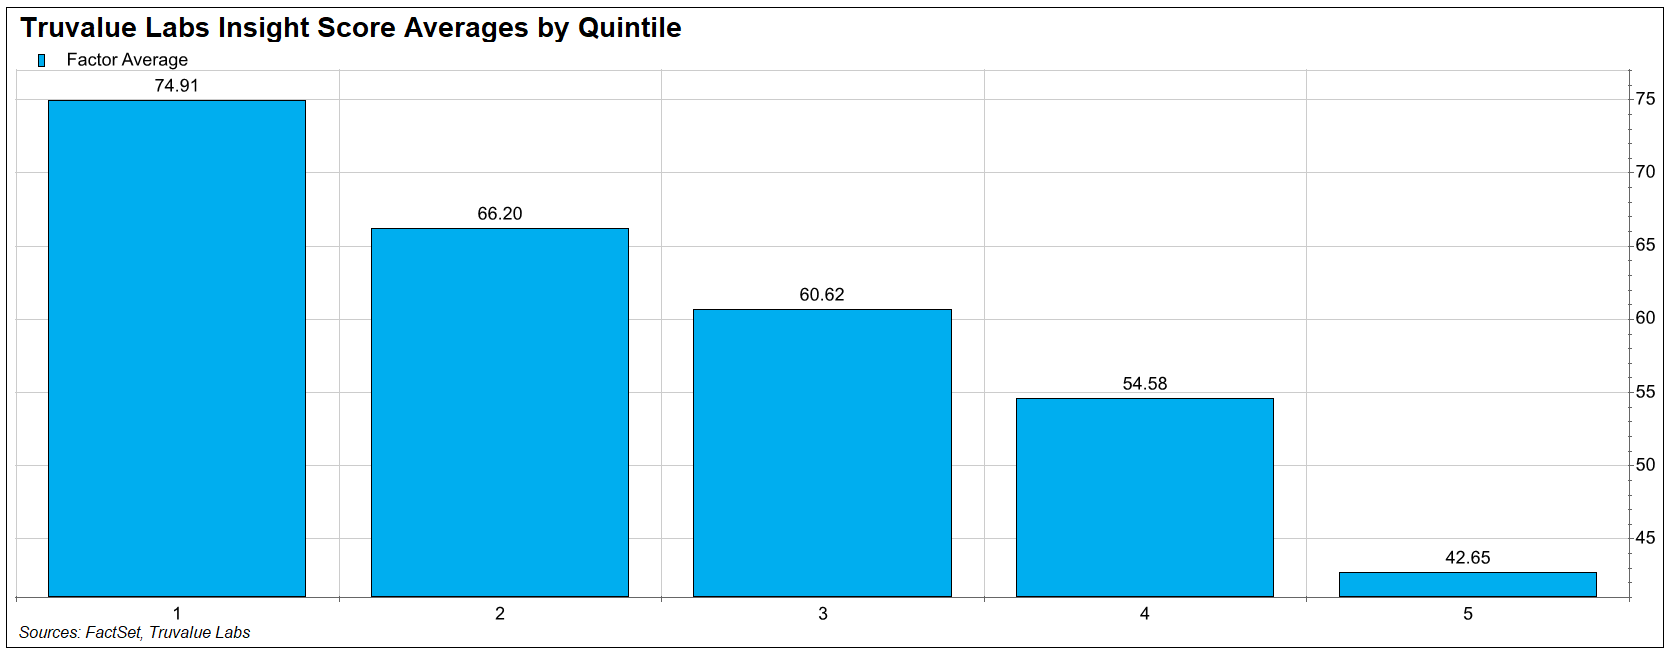 TVL Insight Score Averages by Quintile